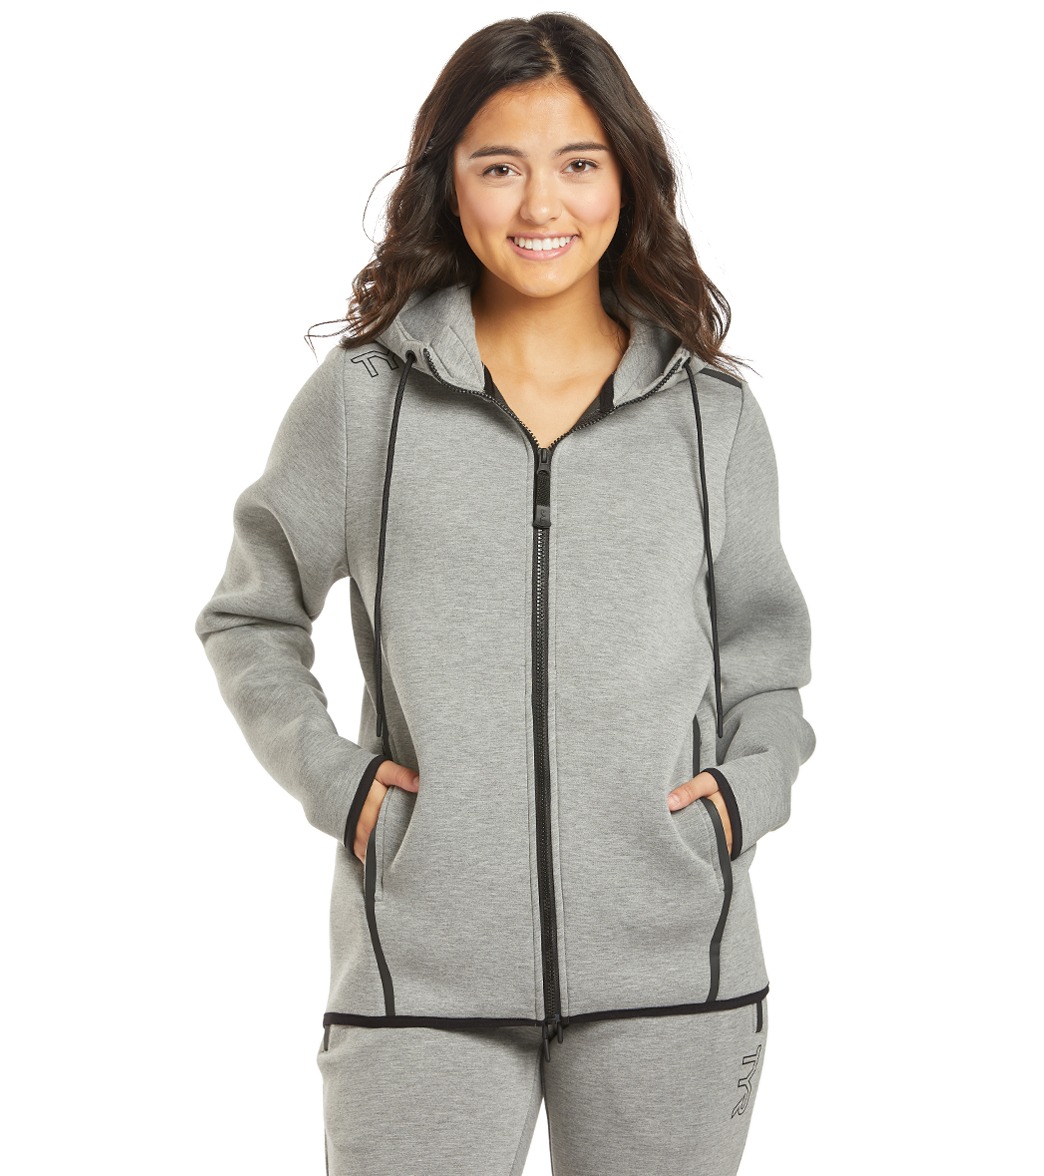 TYR women's elite team full zip hoodie - heather grey small size small - swimoutlet.com